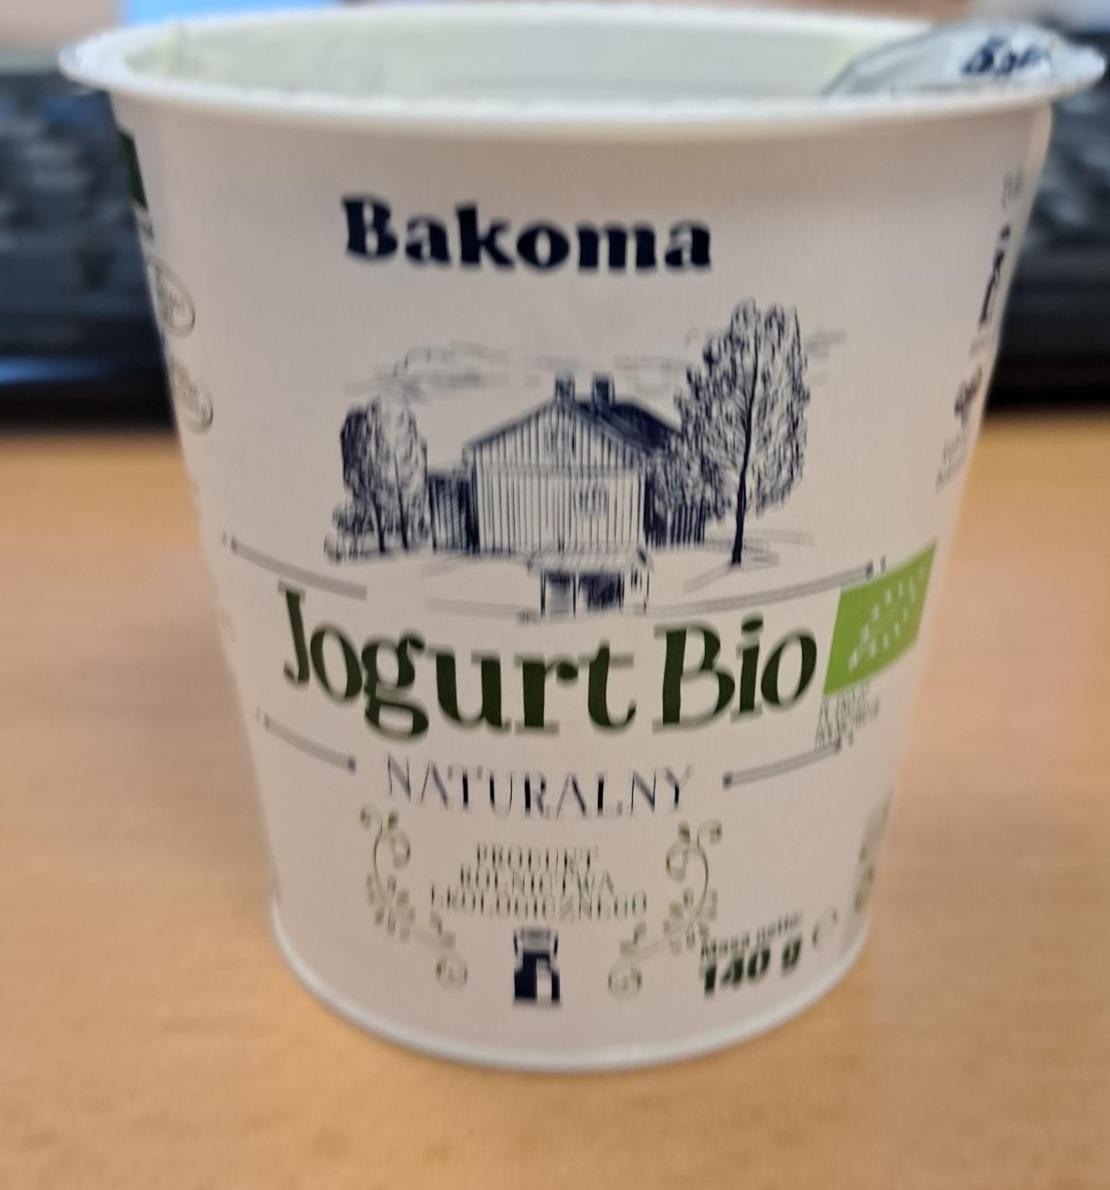 Fotografie - Jogurt Bio naturalny Bakoma